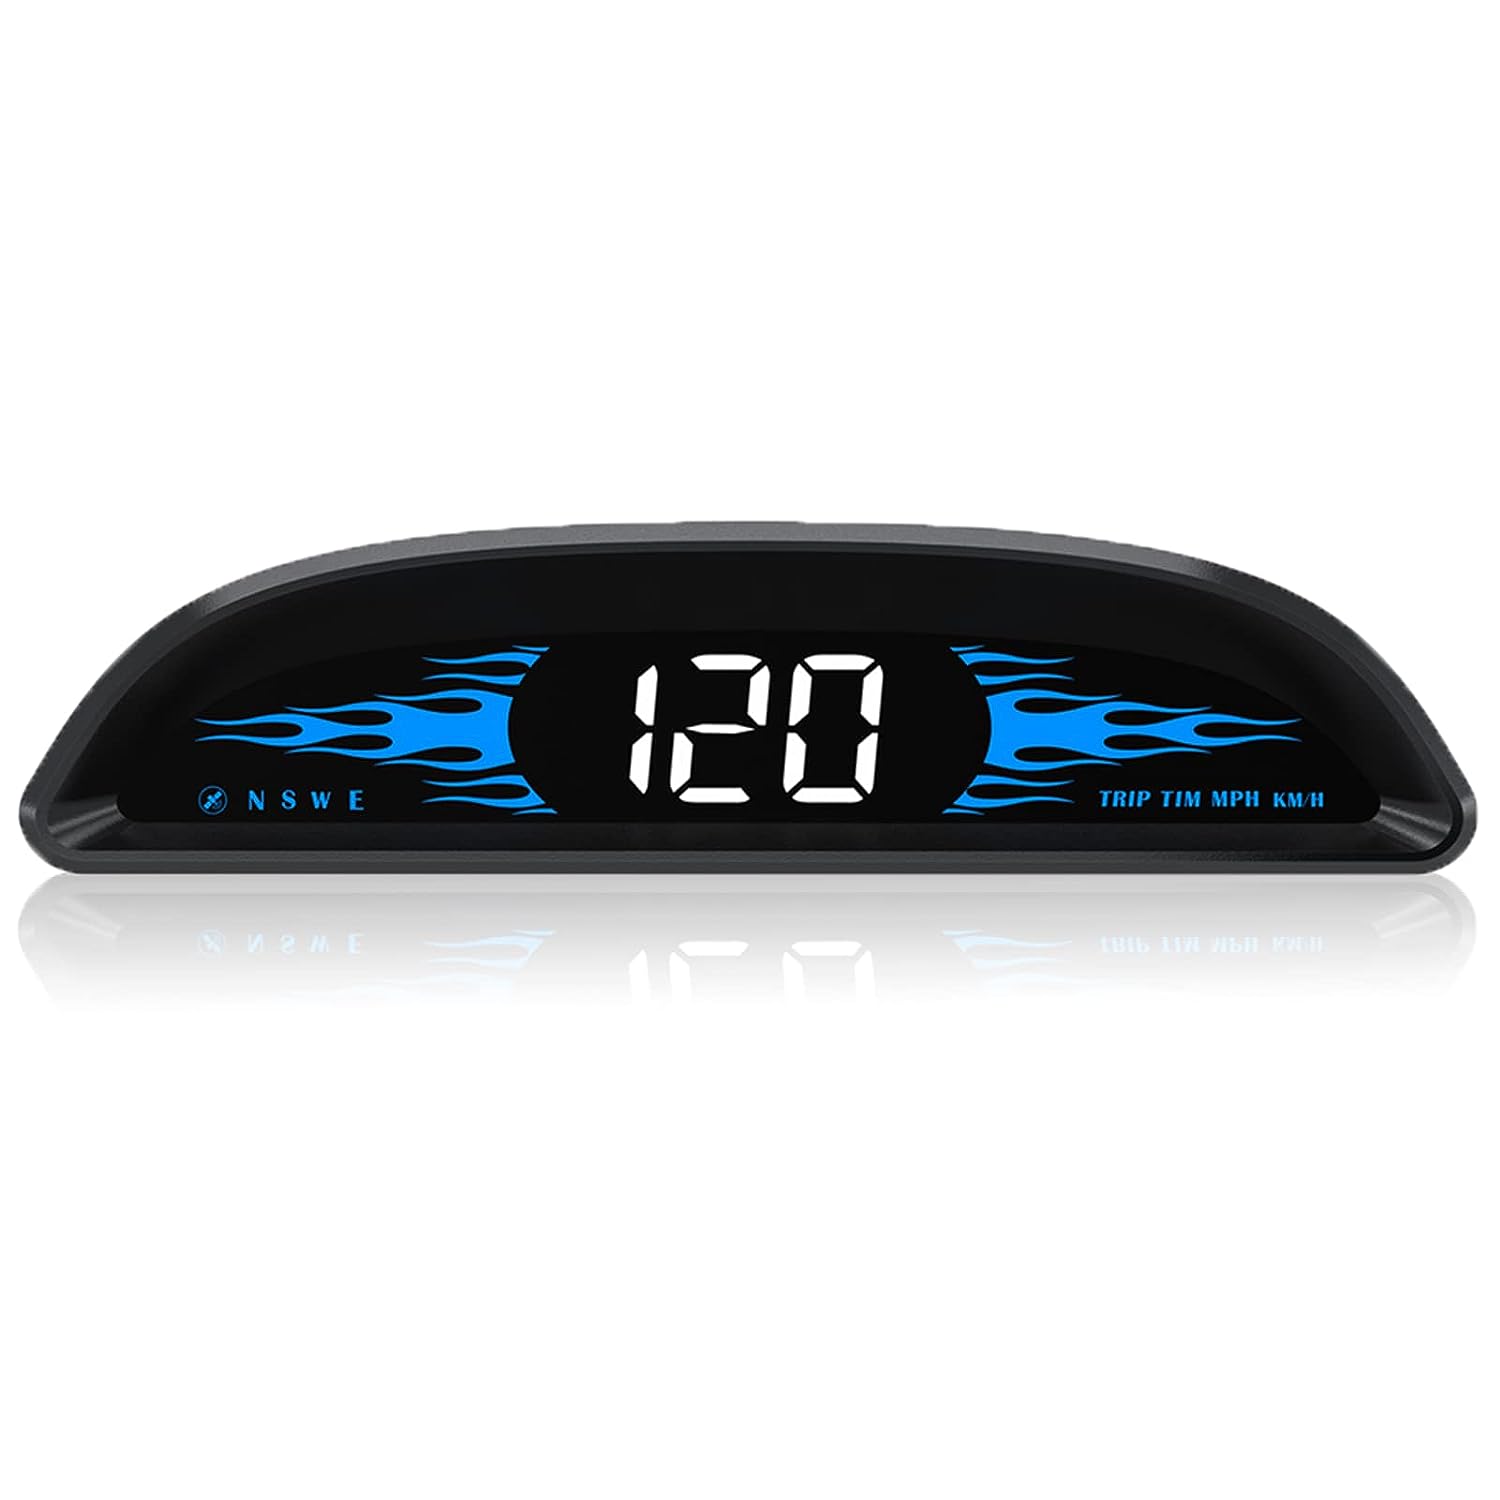 Digital GPS Speedometer, VEESA Car Universal HUD Head Up Display, GPS Smart Gauge Speedometer with Speed MPH Compass Fatigued Driving Alert Overspeed Alarm Trip Meter for All Vehicle (Black)